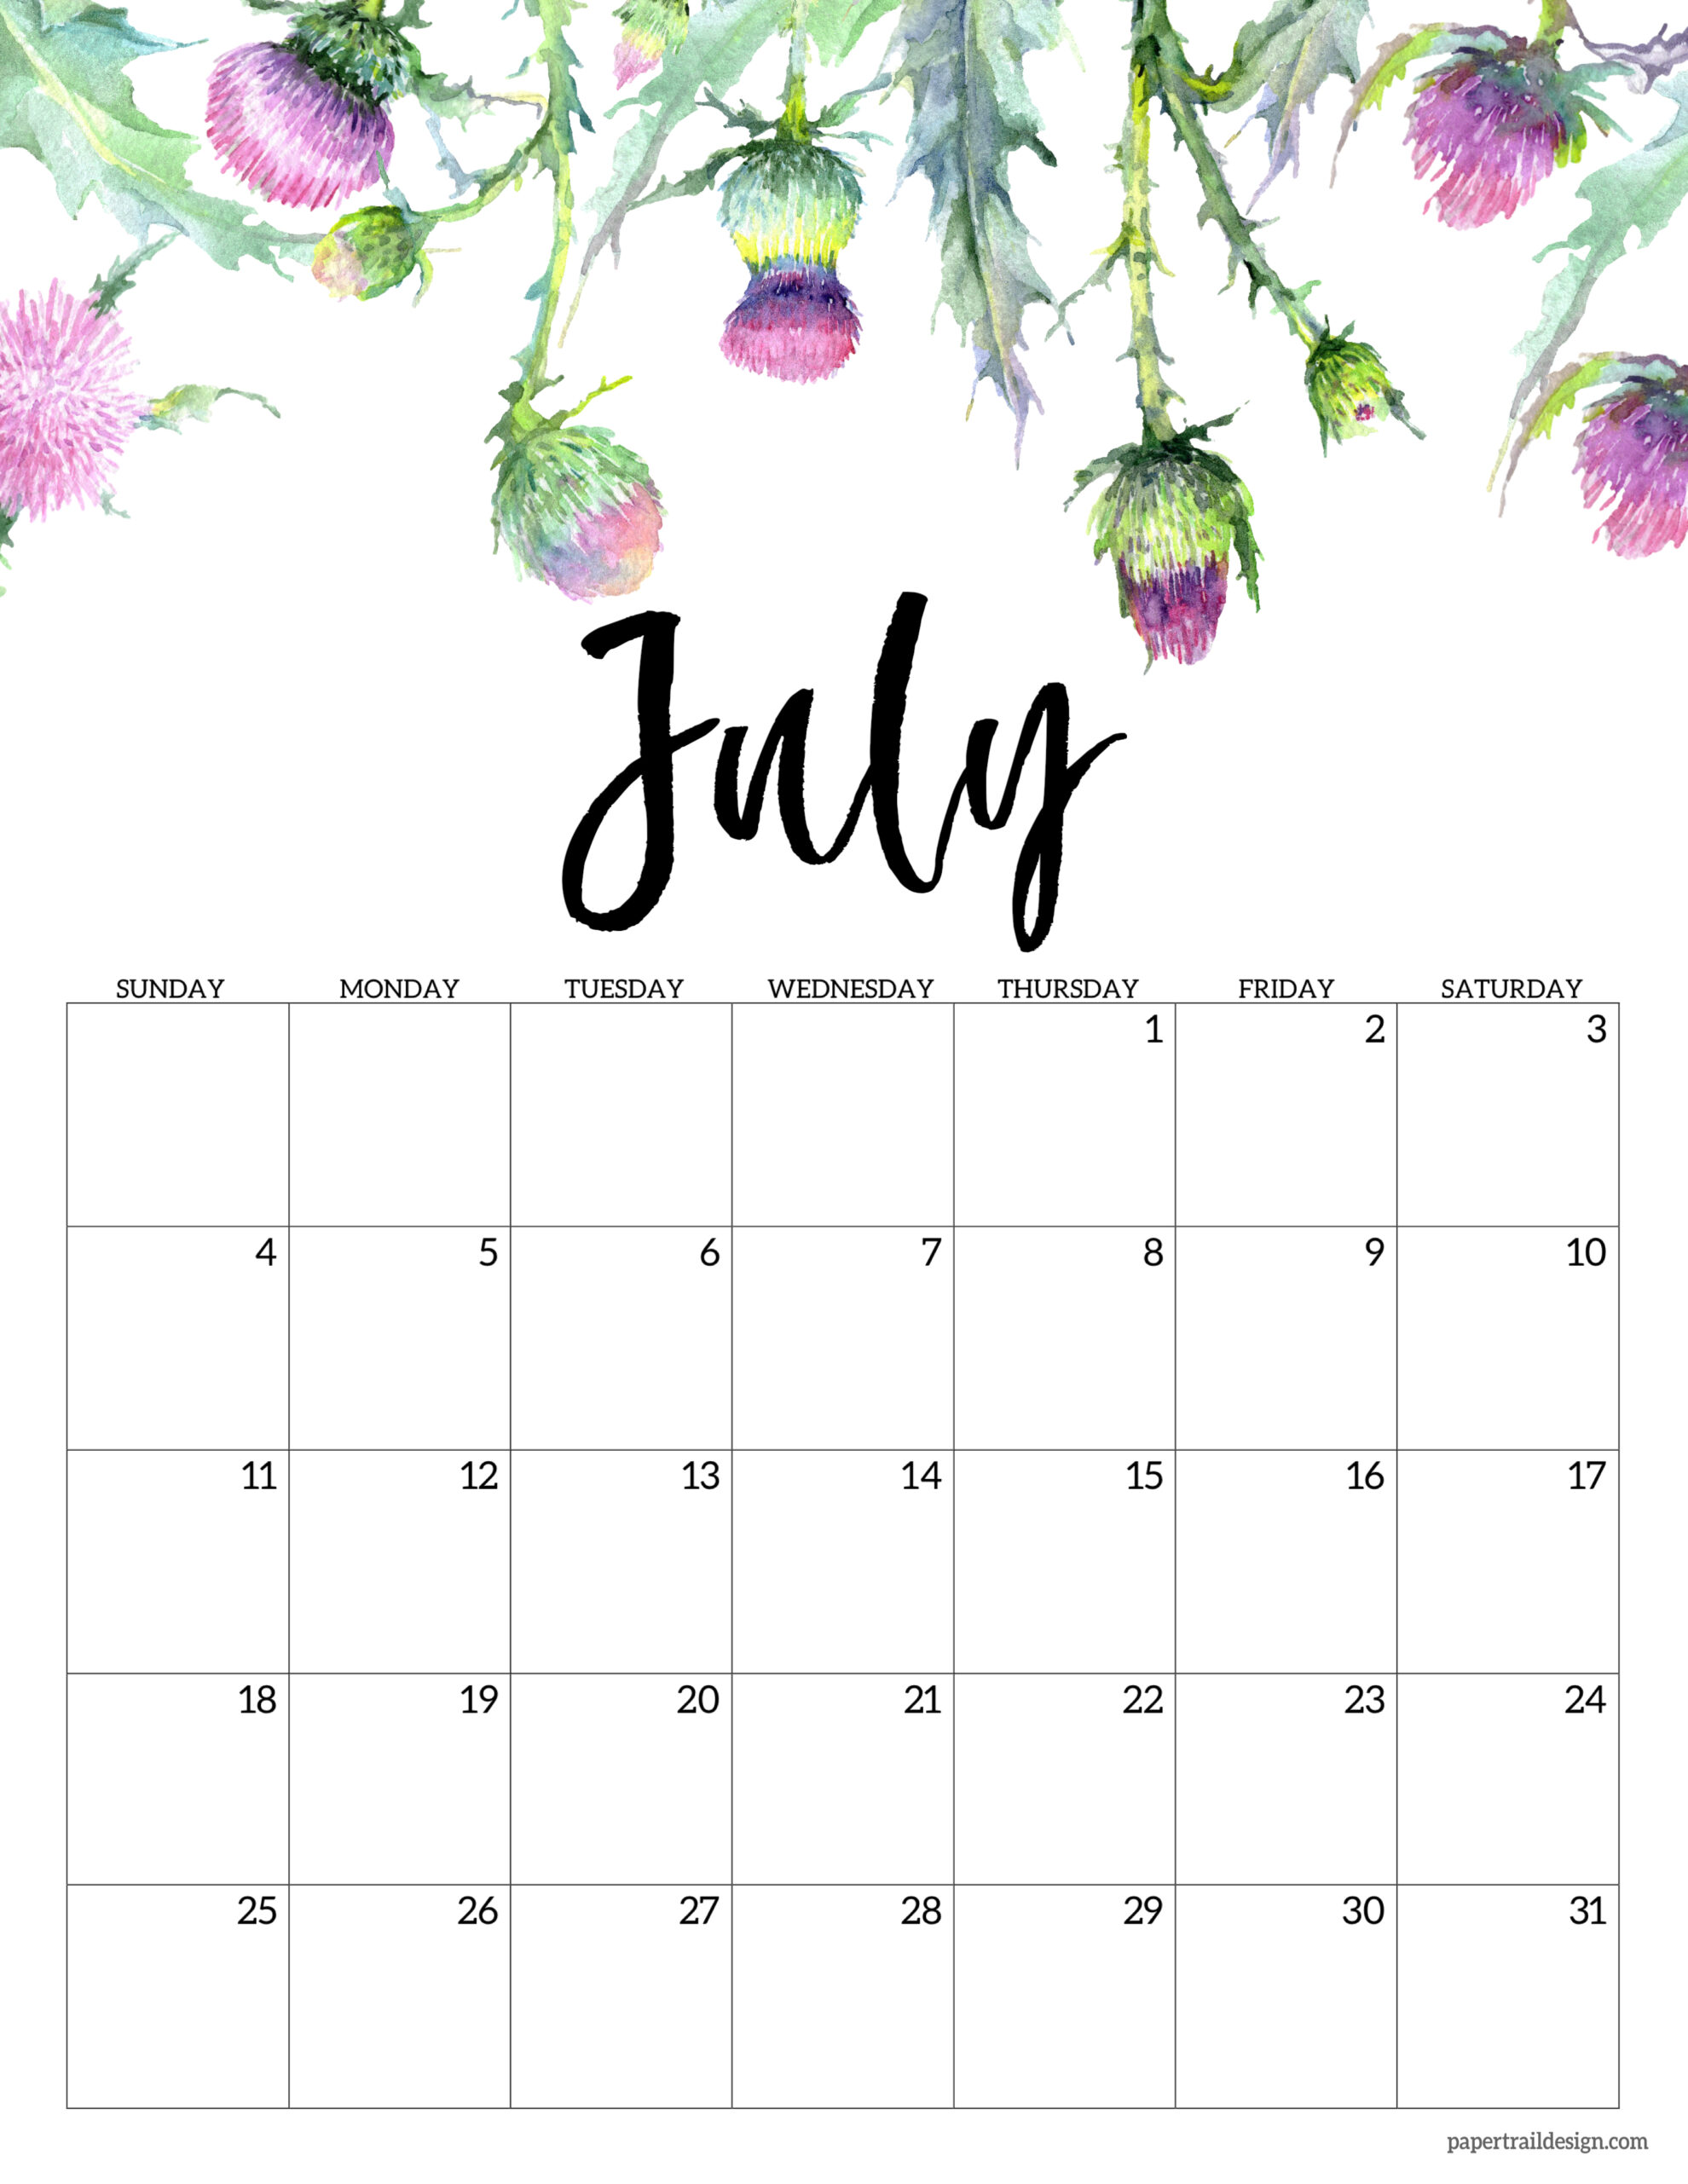 july 2021 calendar floral 2021 Free Printable Calendar Floral Paper Trail Design july 2021 calendar floral